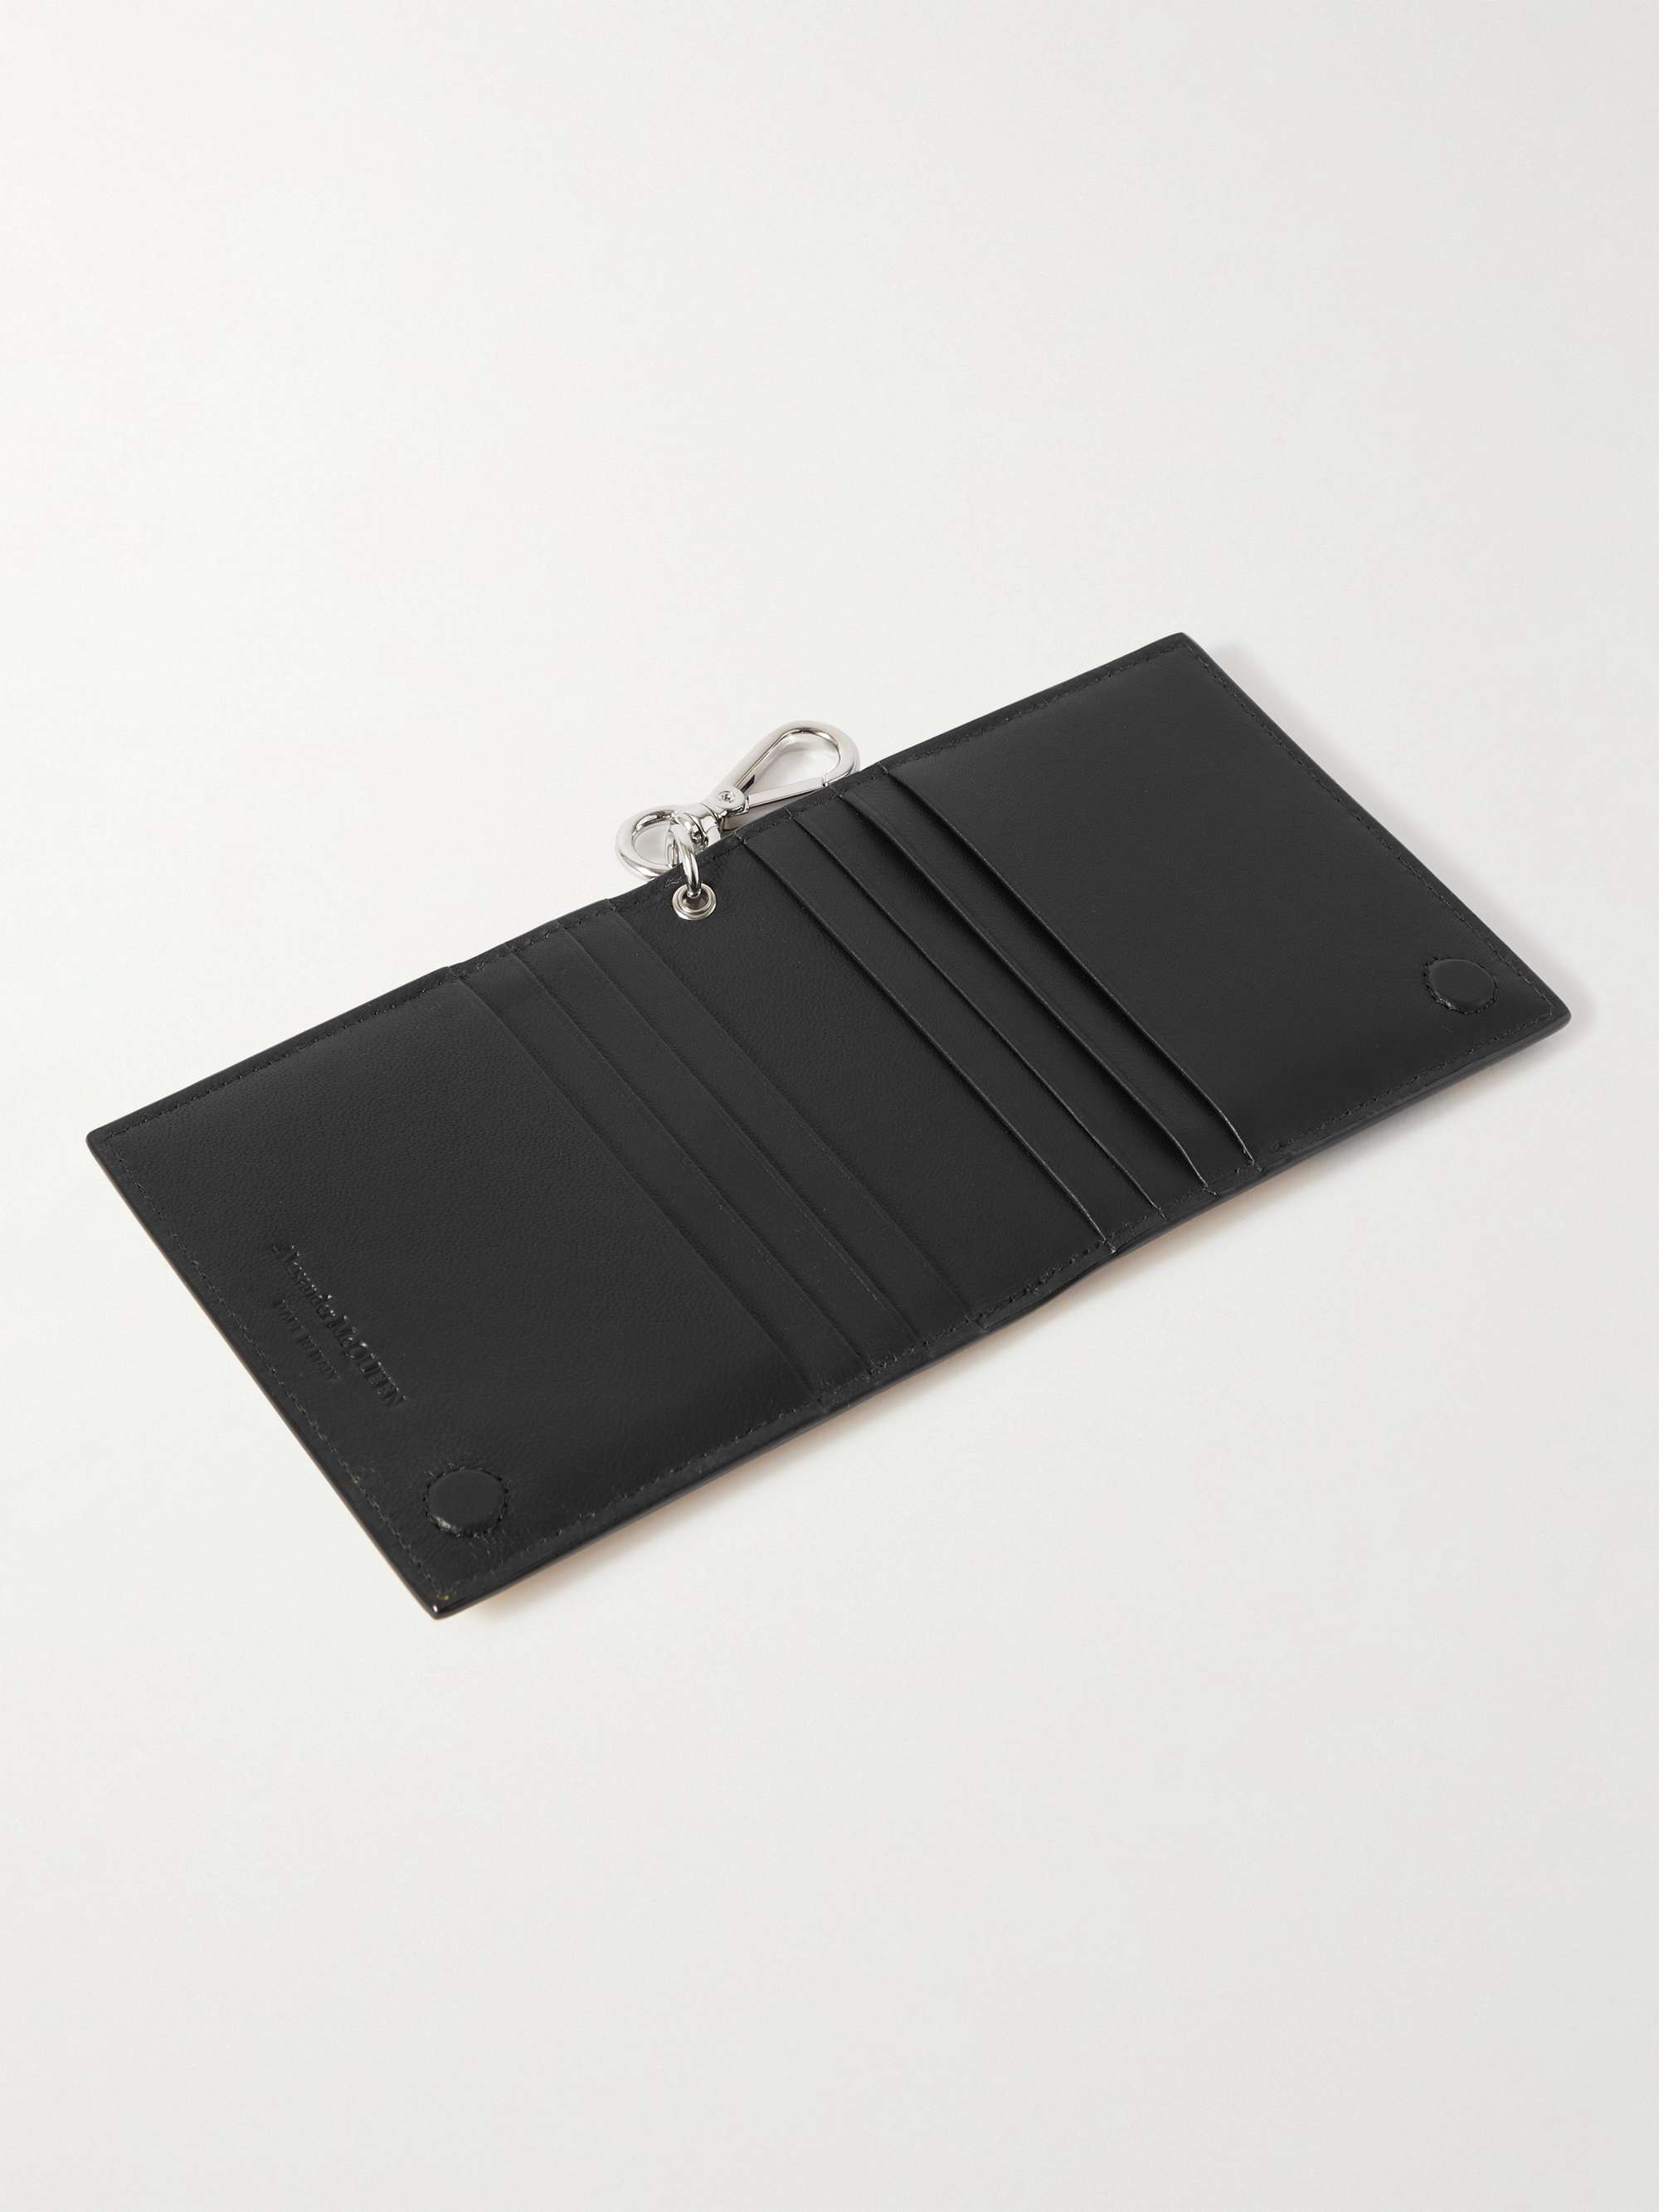 ALEXANDER MCQUEEN Silhouette Printed Leather Billfold Cardholder